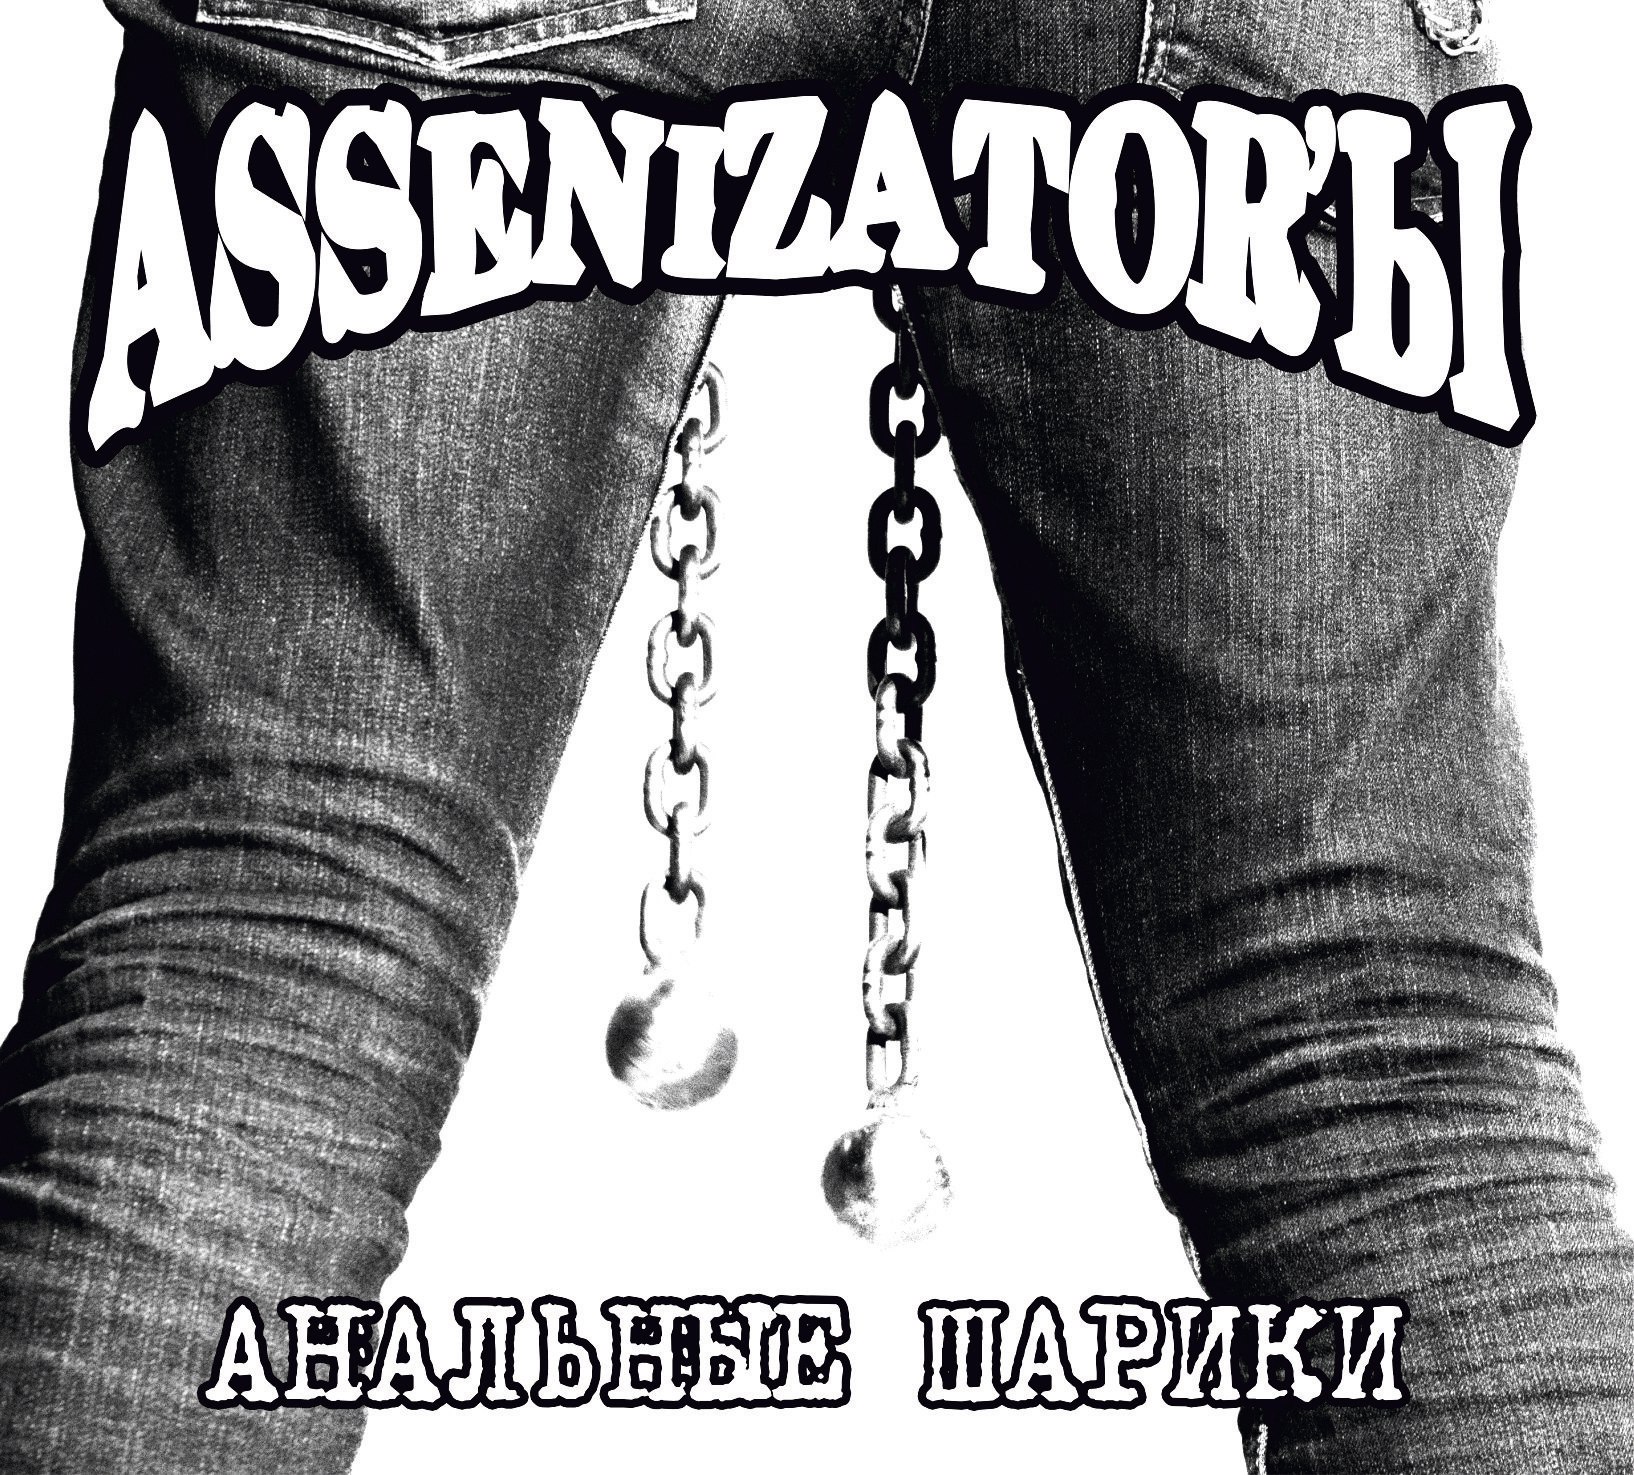 Assenizator'ы " Анальные шарики" CD (DigiPac)